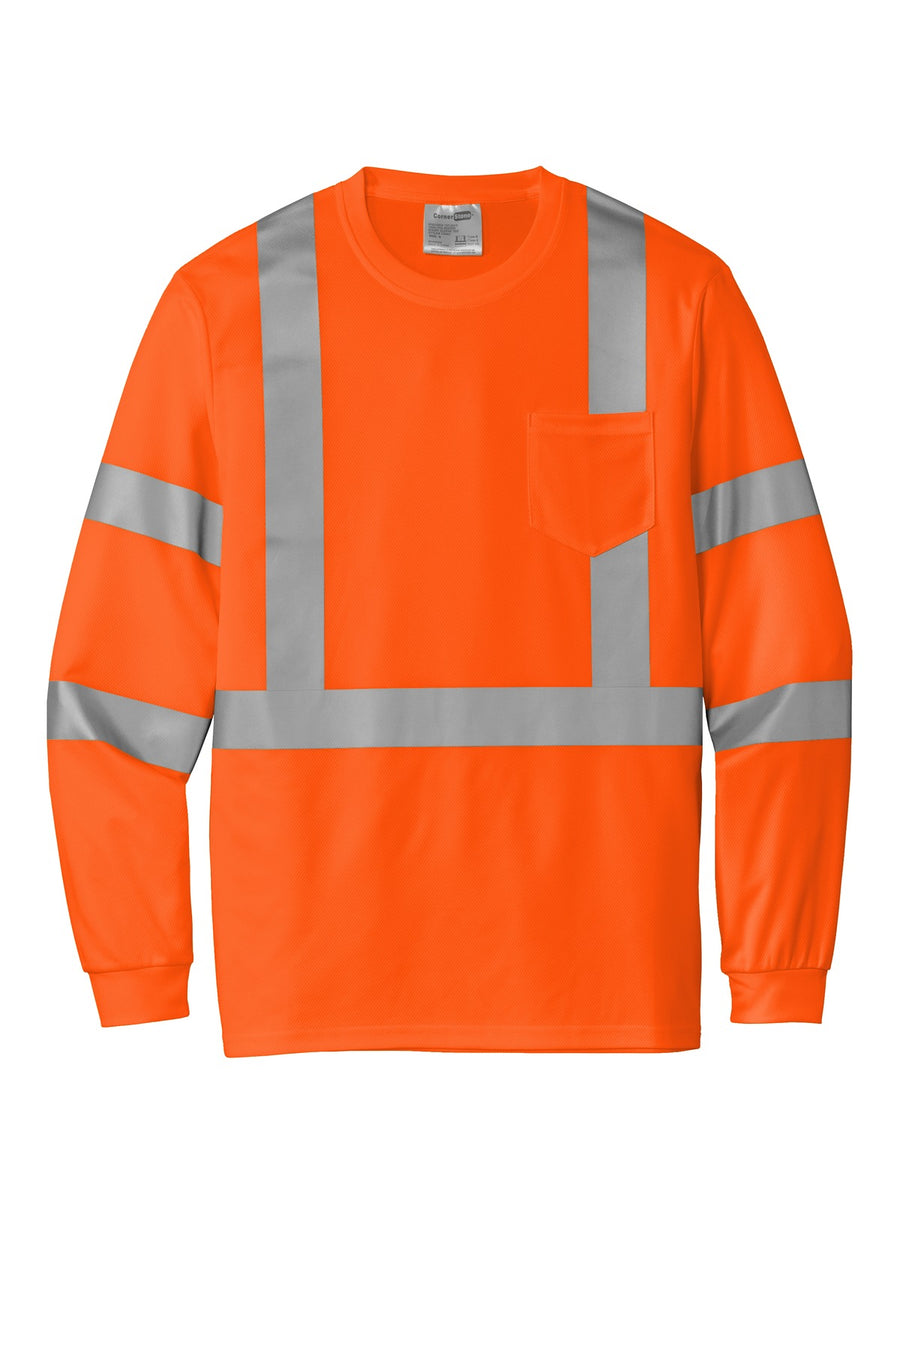 CS203-Safety Orange-front_flat